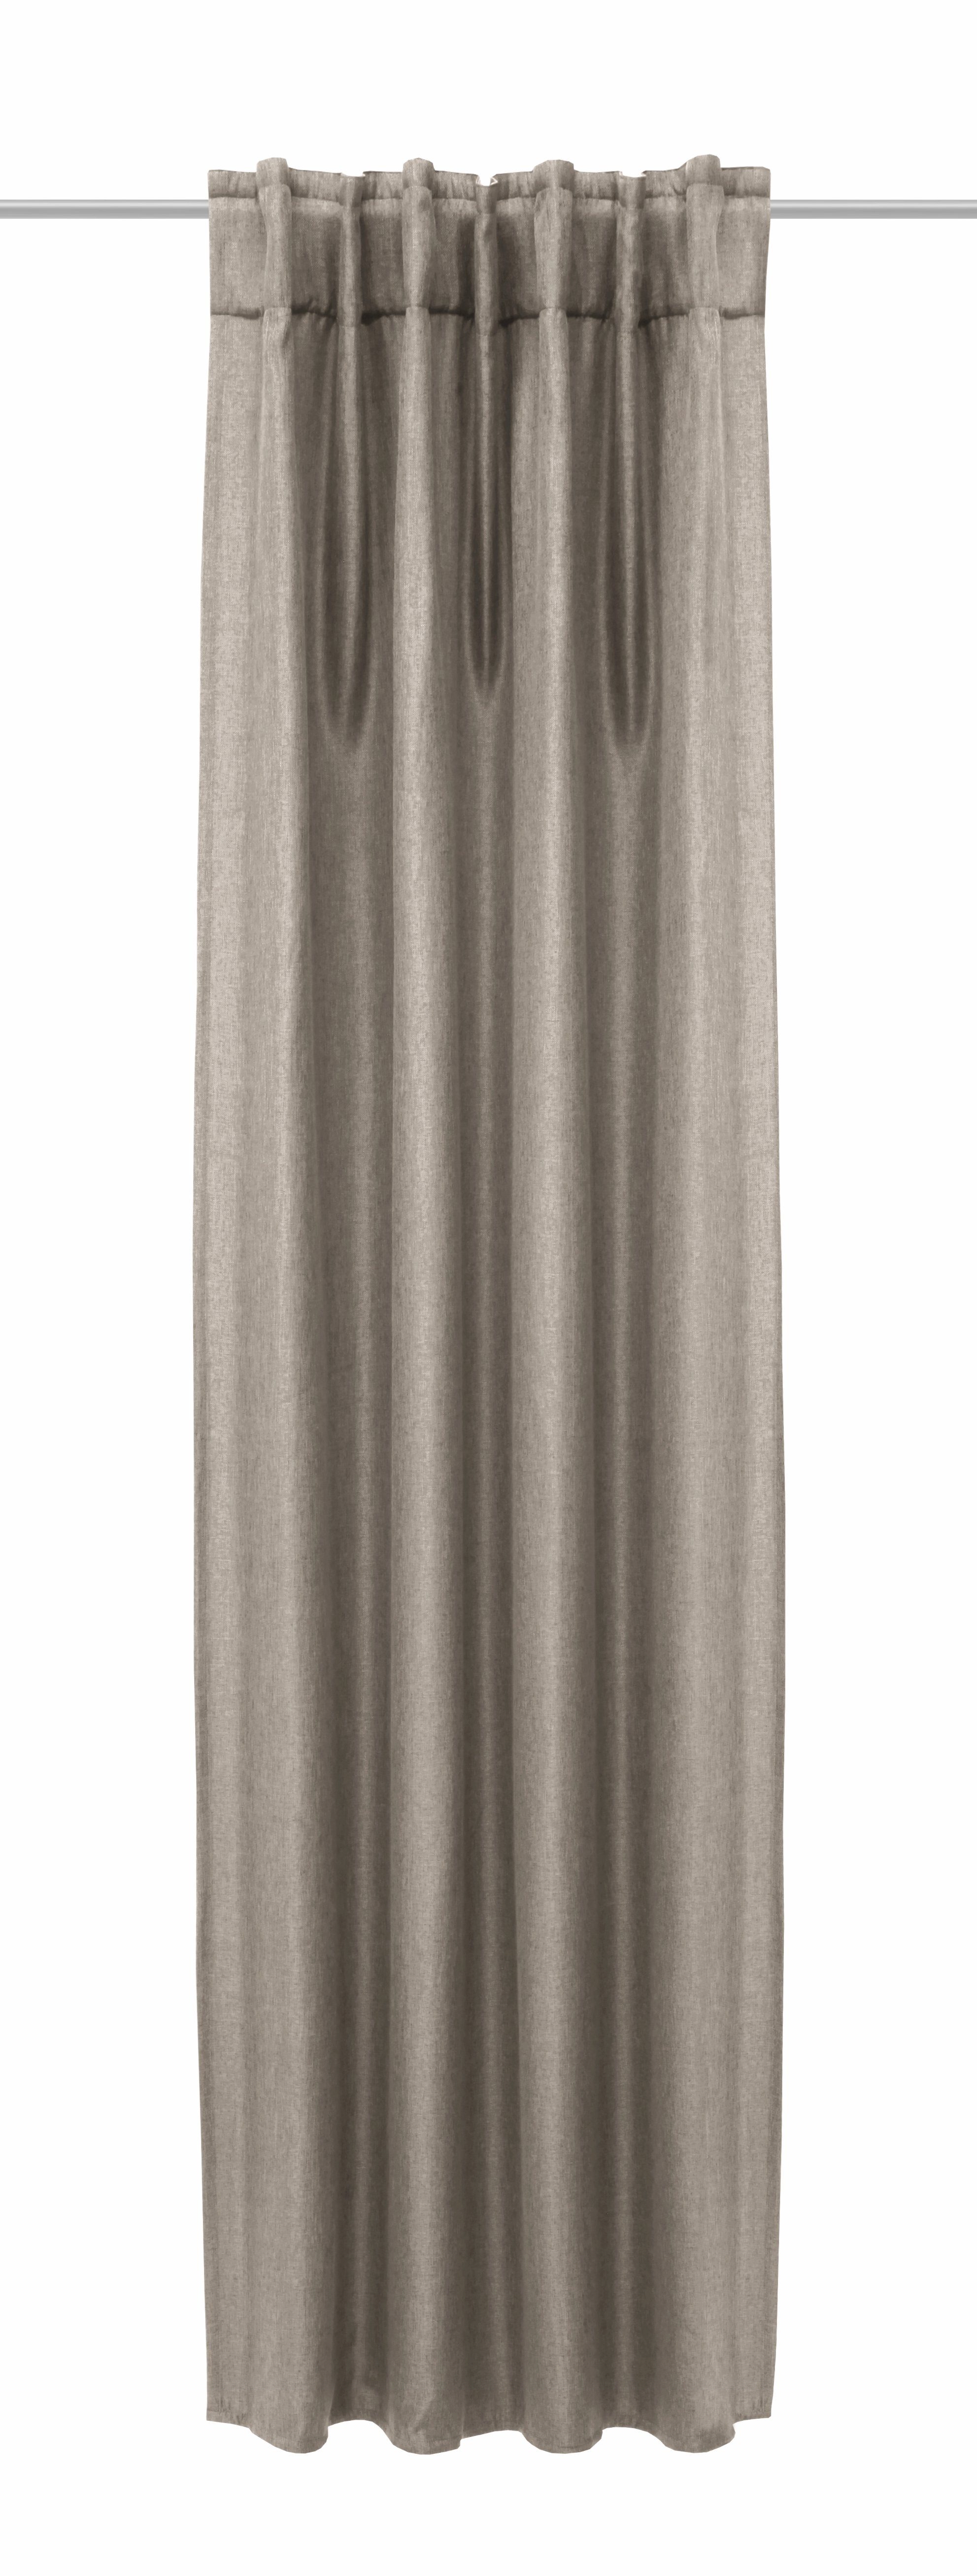 Verdunkelungsvorhang Verdunkelungsvorhang verdunkelnder Jolie Clever-Kauf-24, Vorhang Leinenoptik